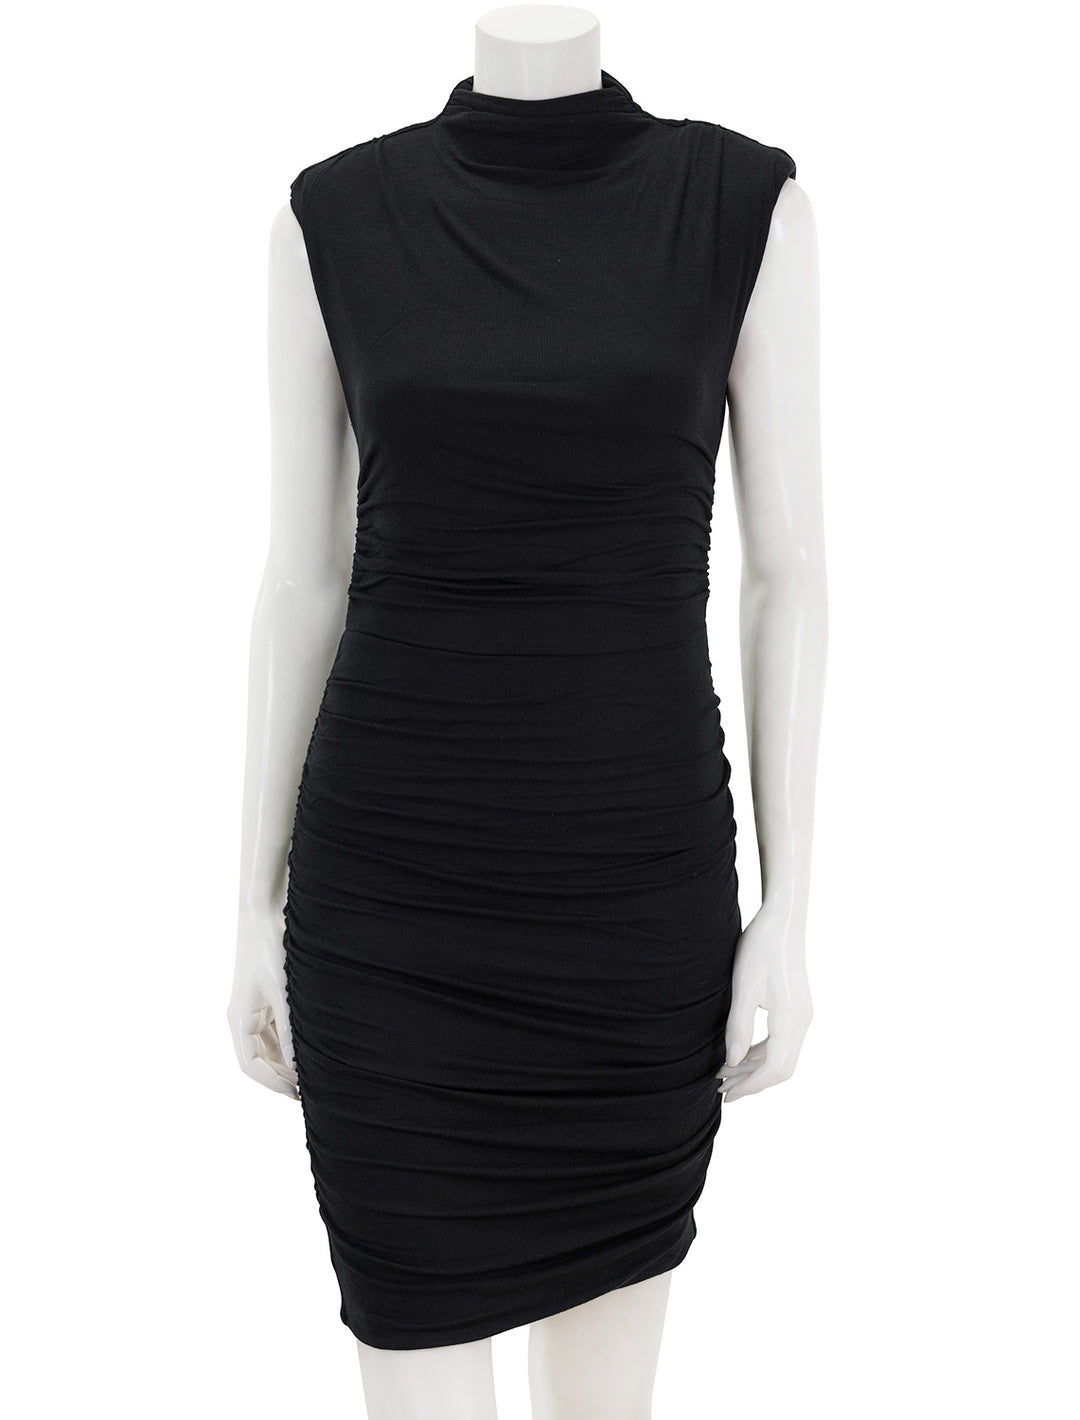 Front view of Veronica Beard's brasha dress in black.